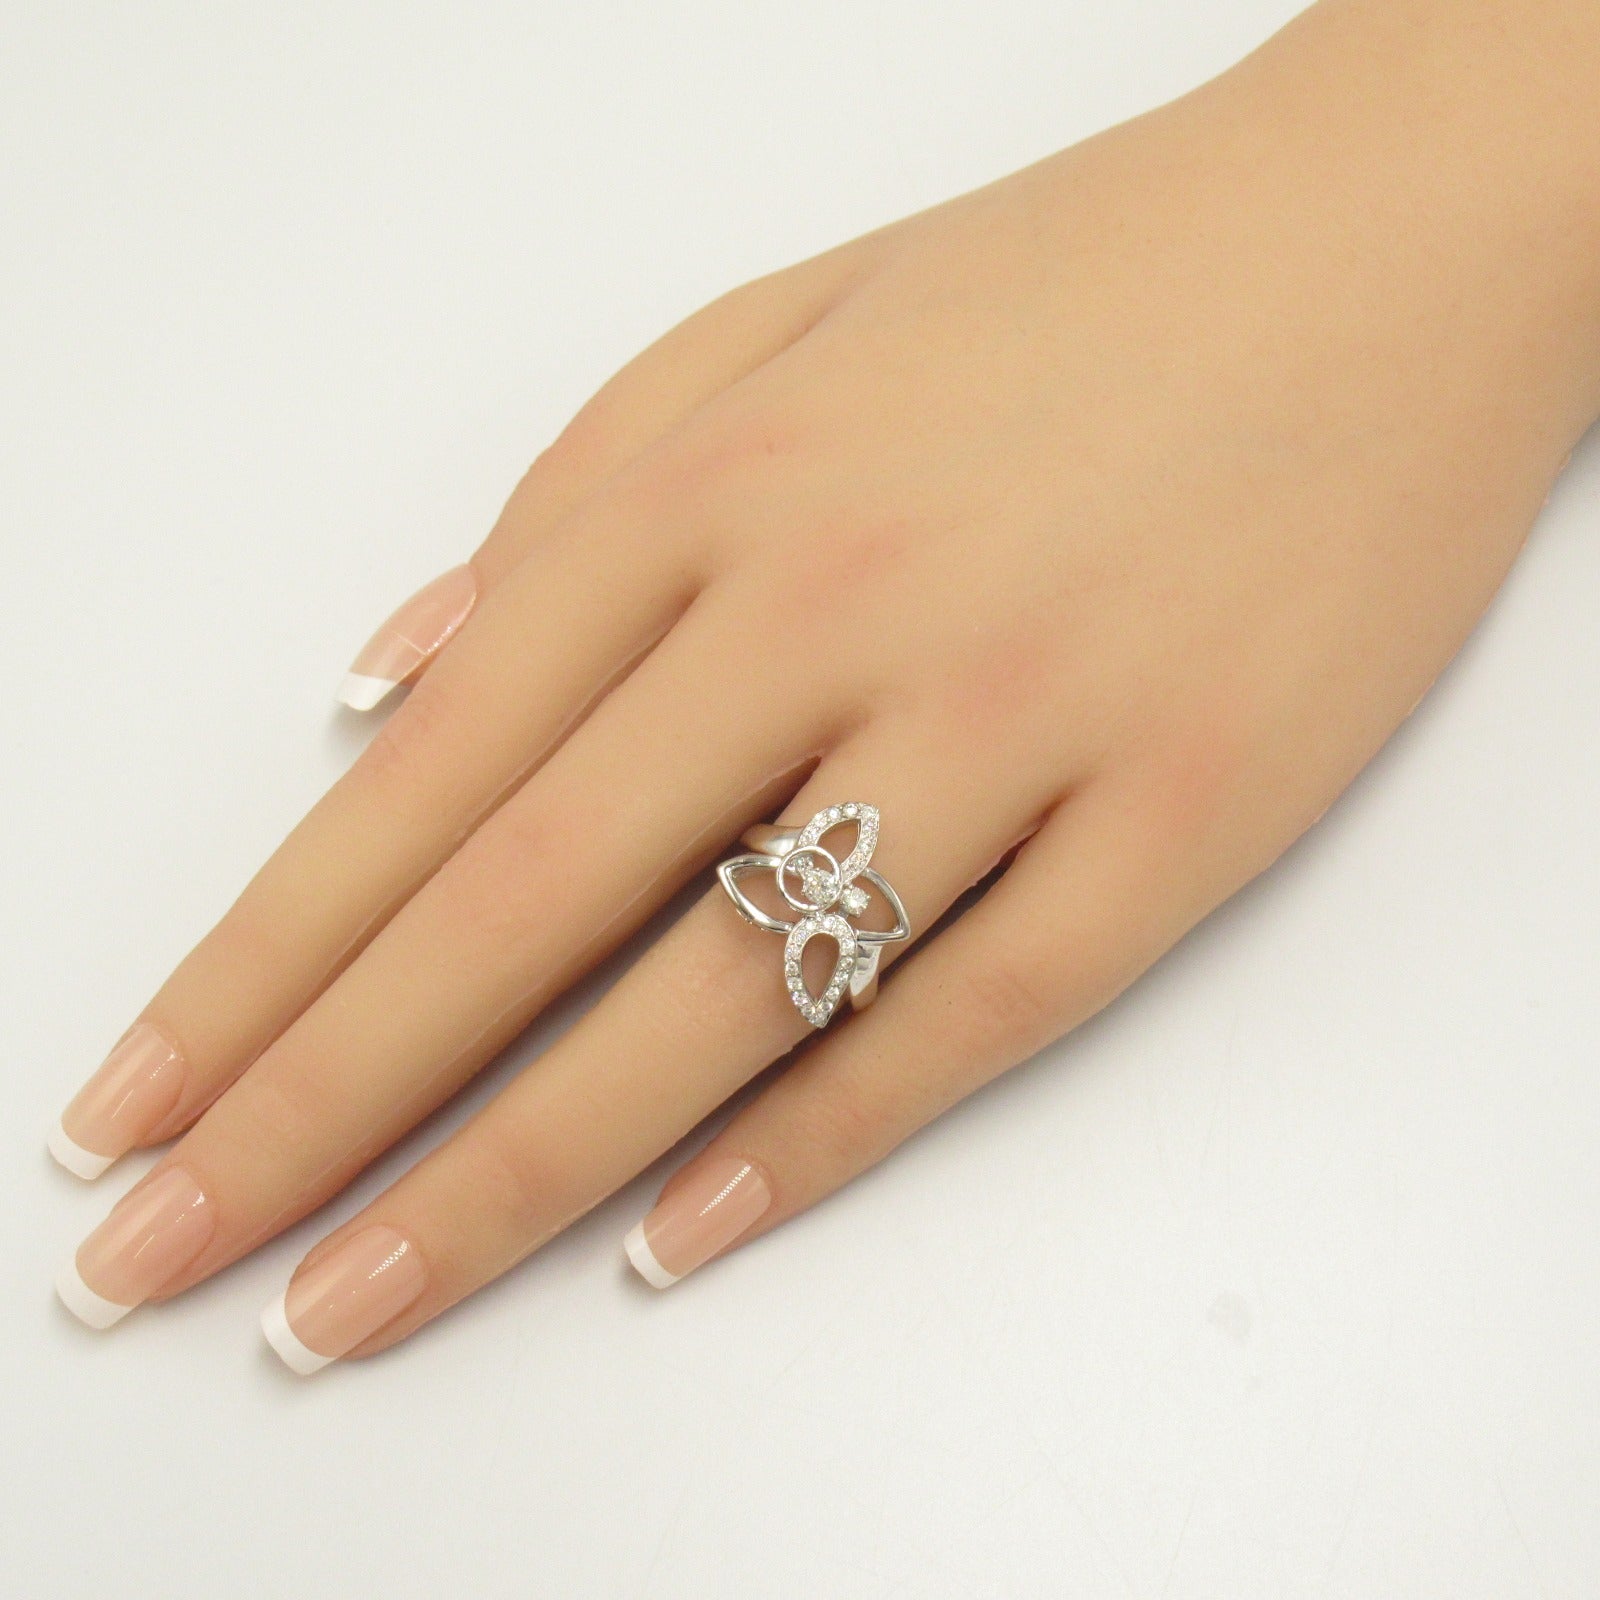 Jewelry Jewelry Diamond Ring Ring Ring Jewelry K18WG (White G) Diamond  Clear Diamond 5.6g